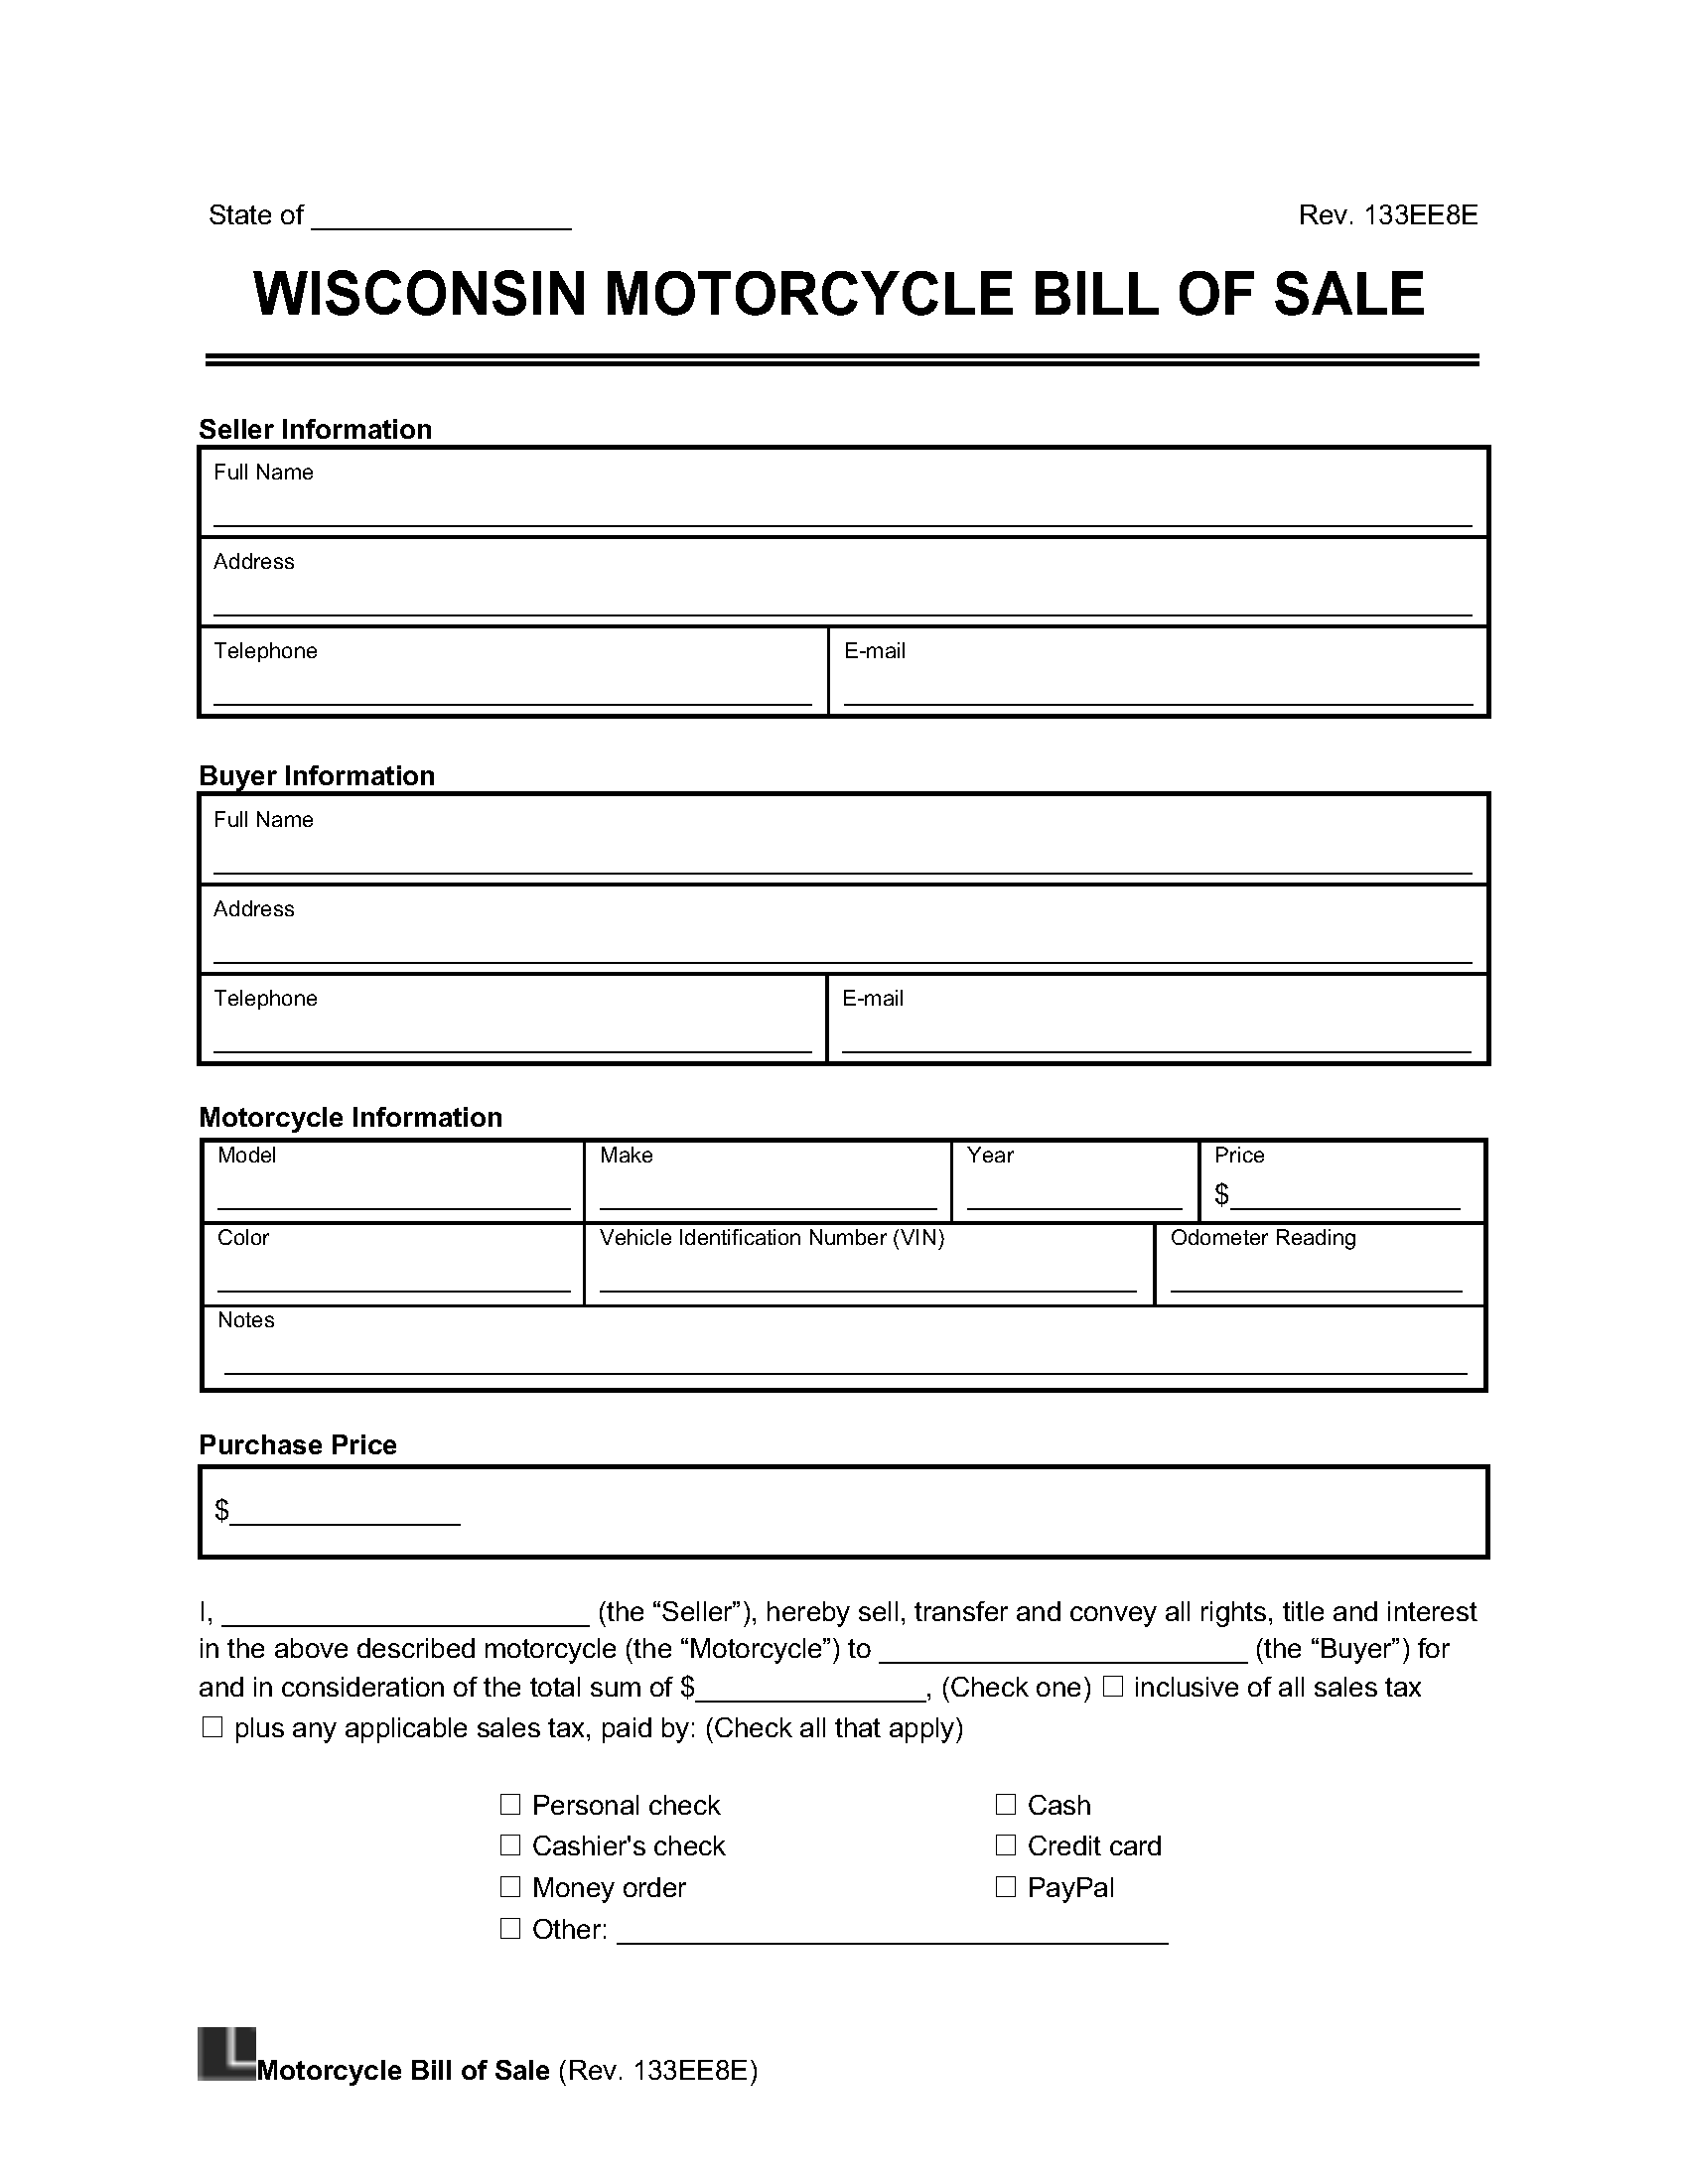 wisconsin motorcycle bill of sale